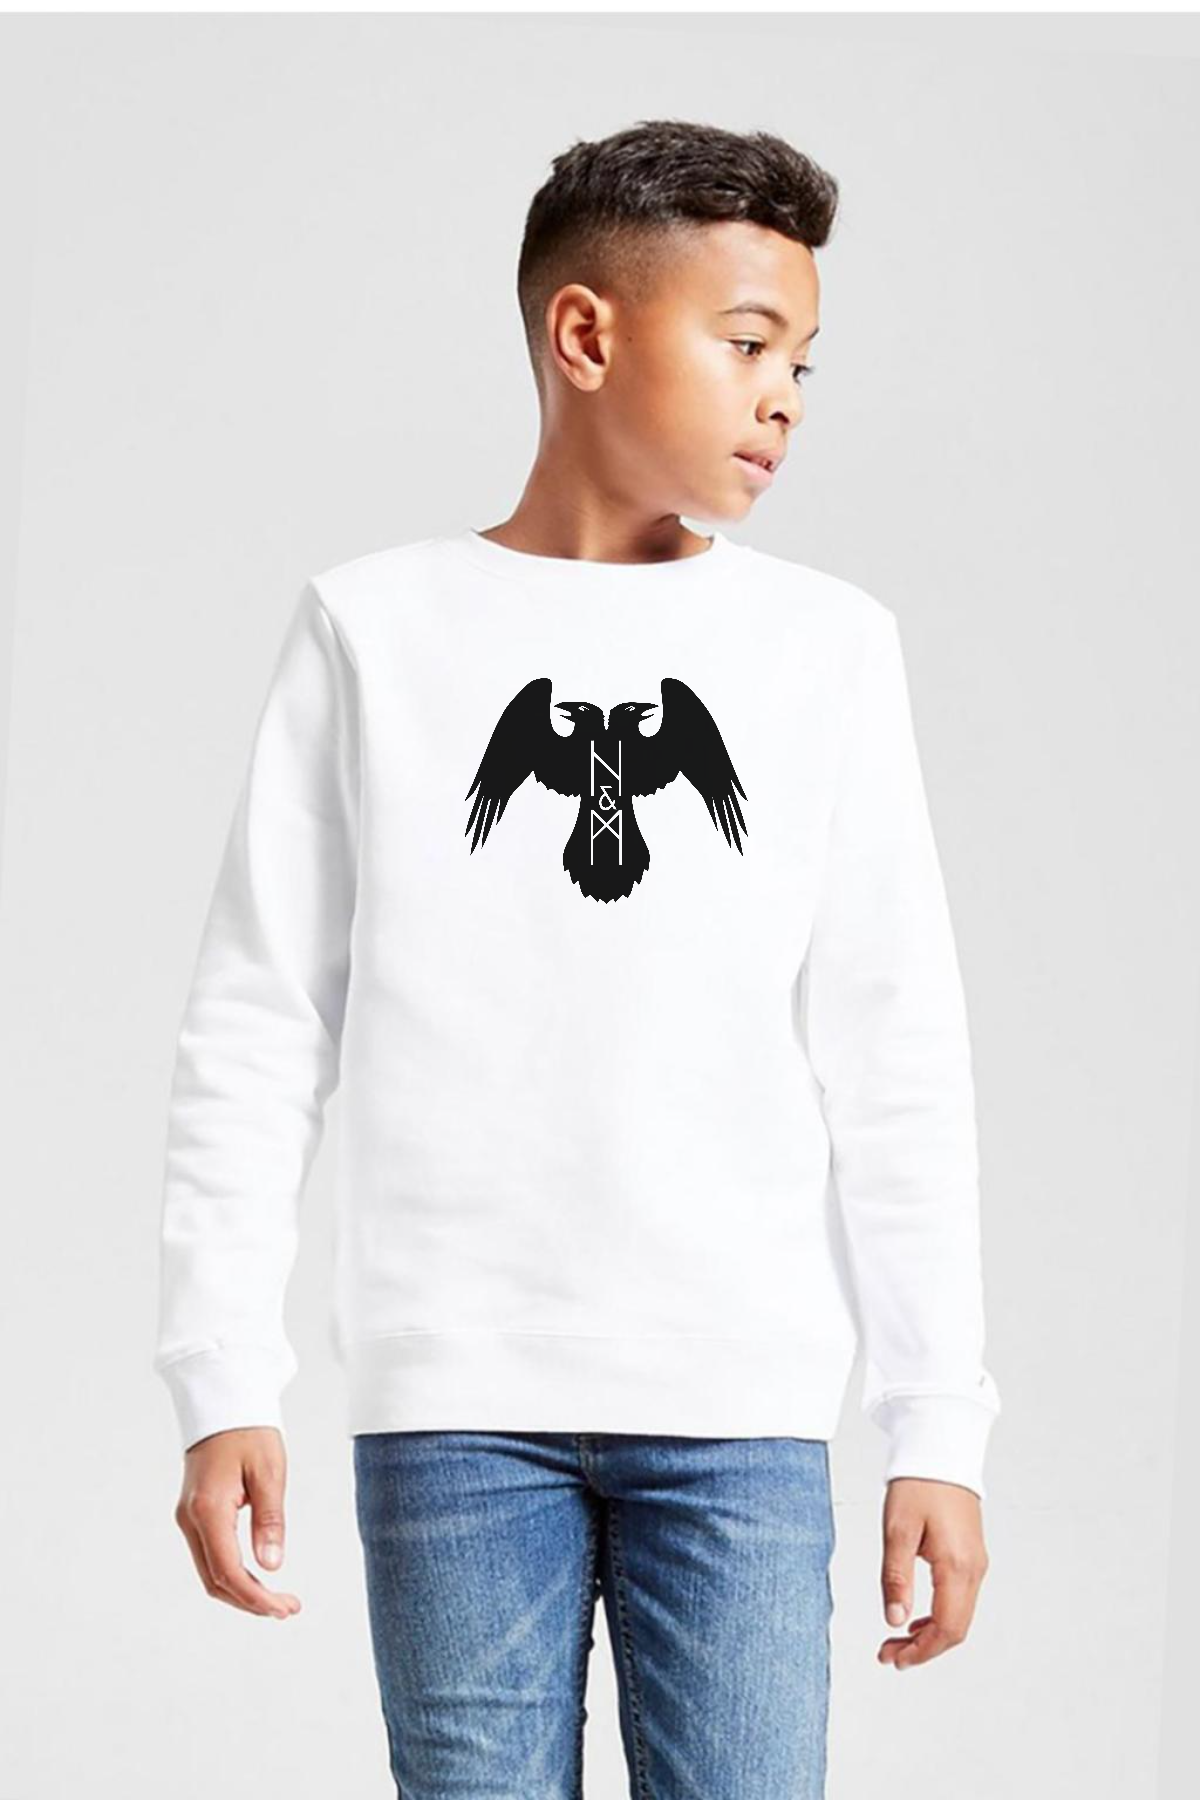 Thors Ravens Huginn and Muninn Beyaz Çocuk 2ip Sweatshirt